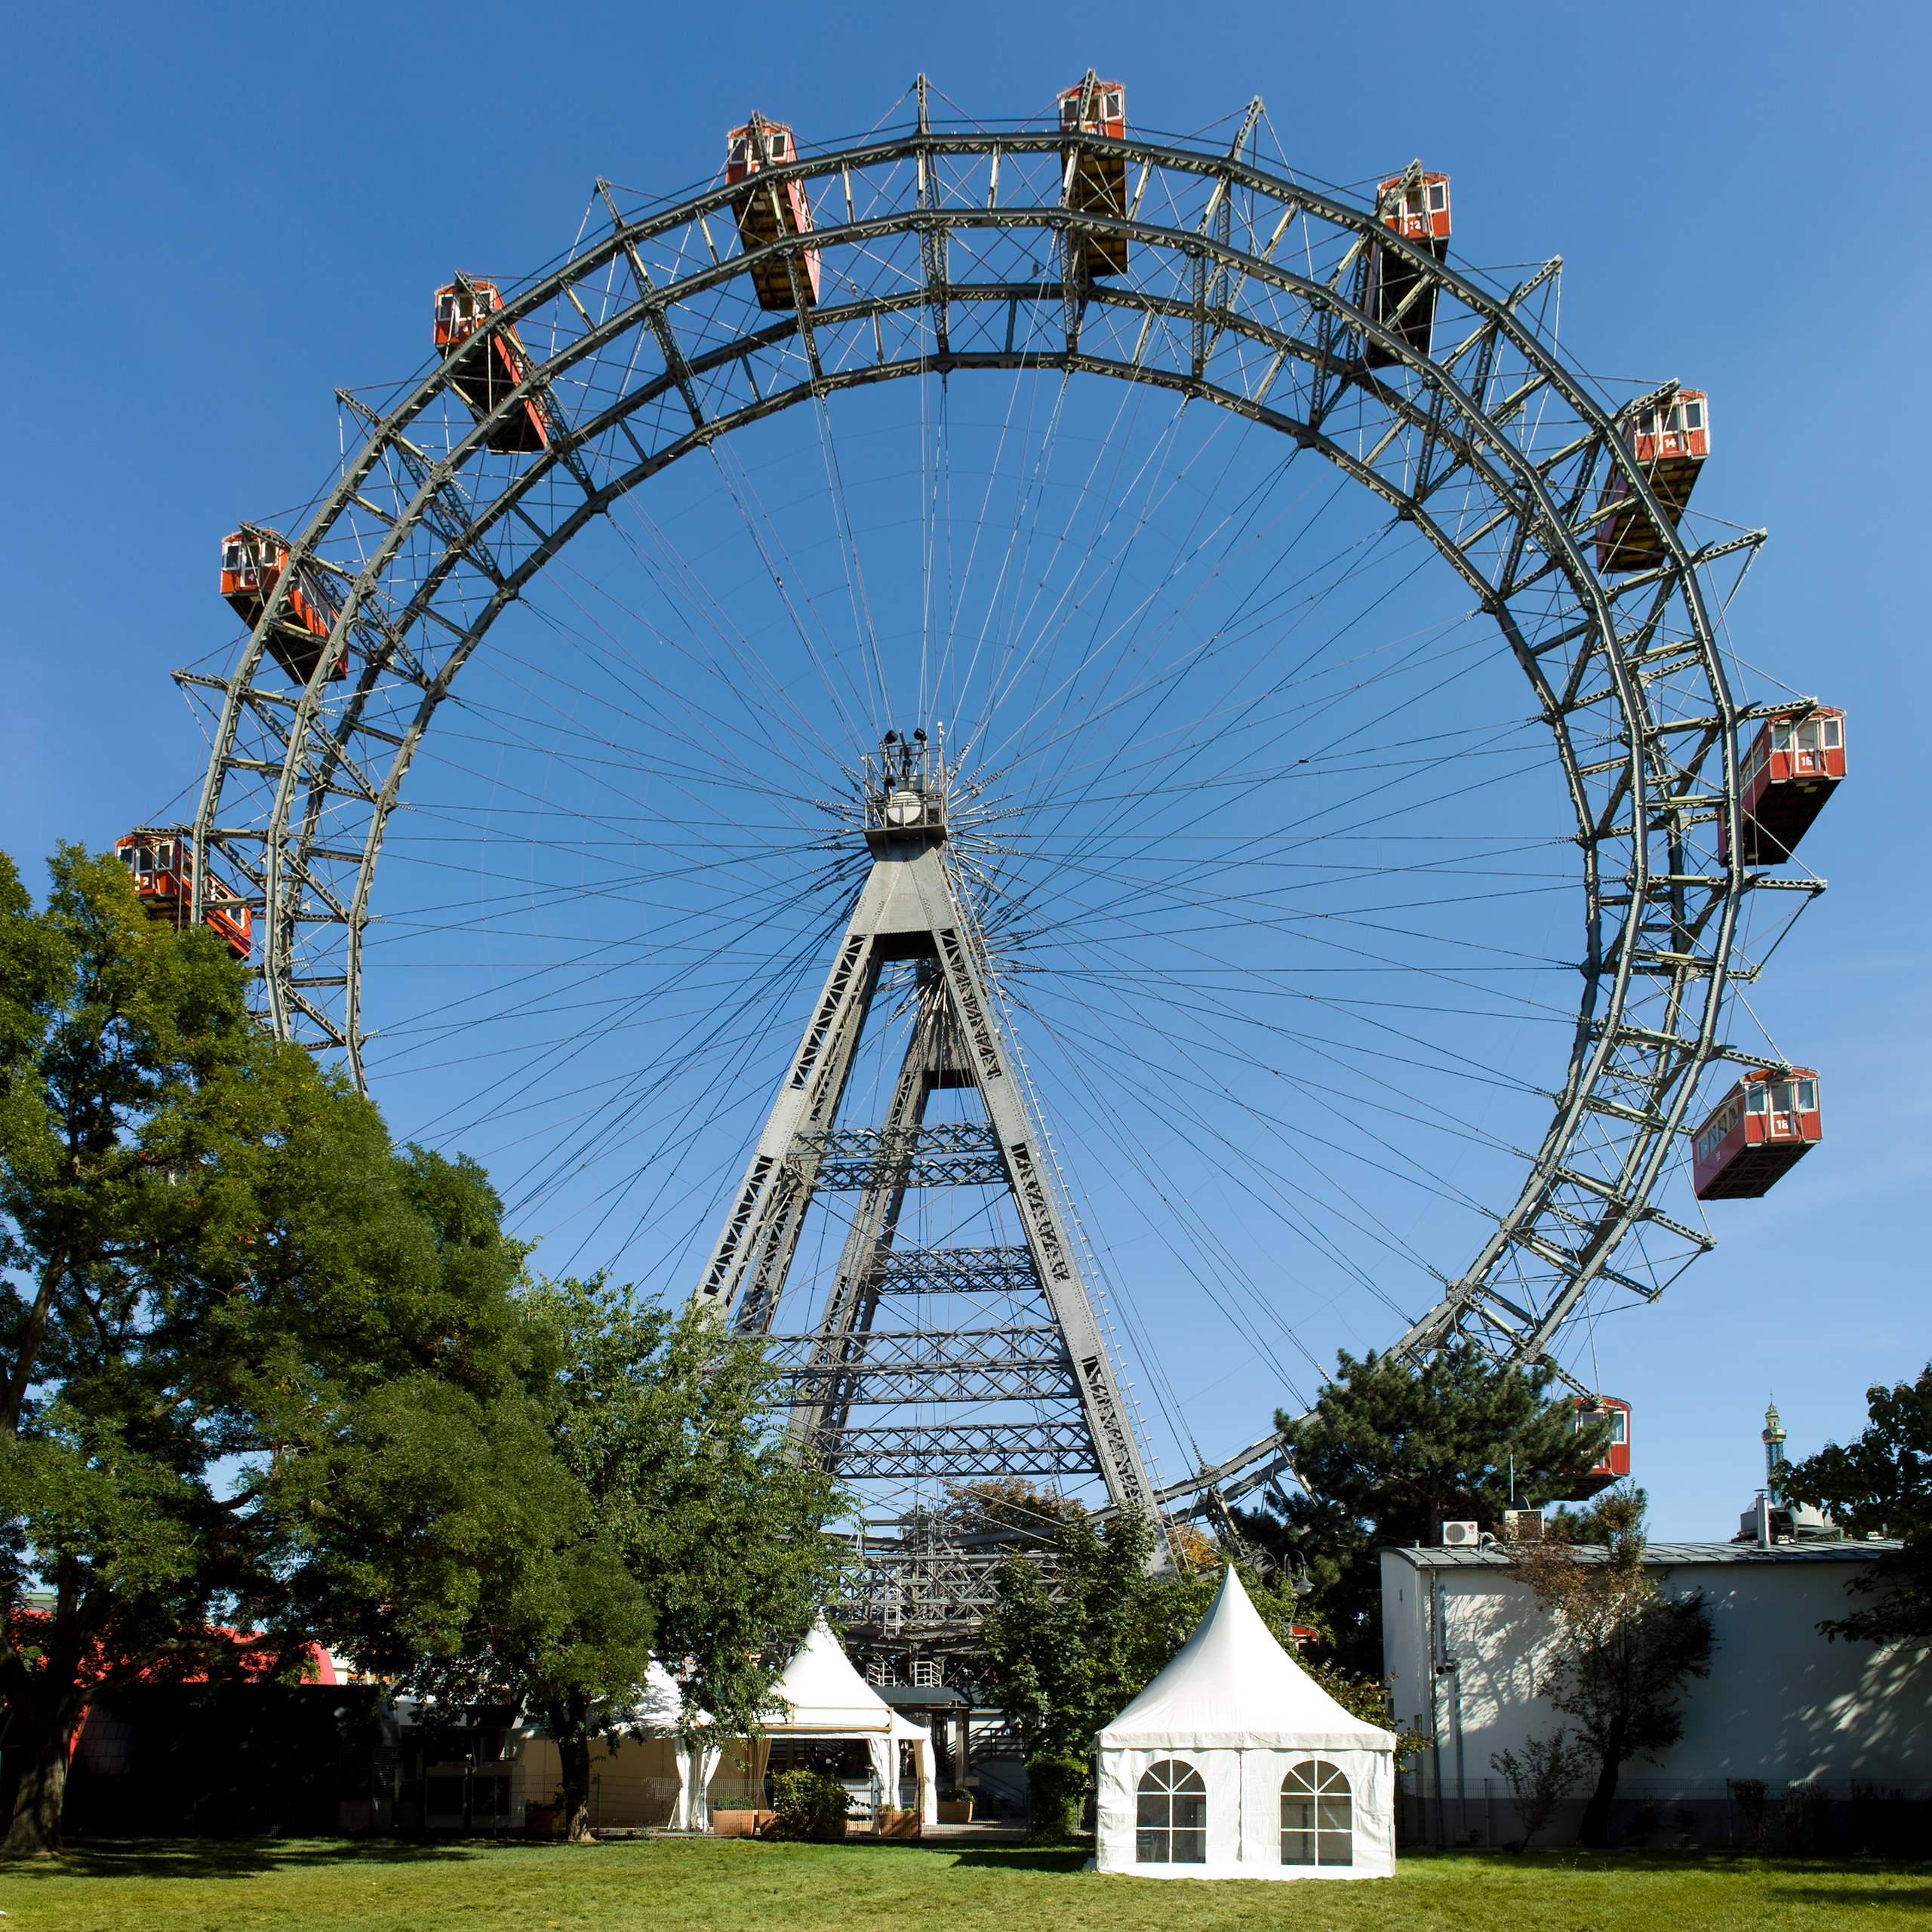 Giant Ferris Wheel Vienna from W on 2010-09-20